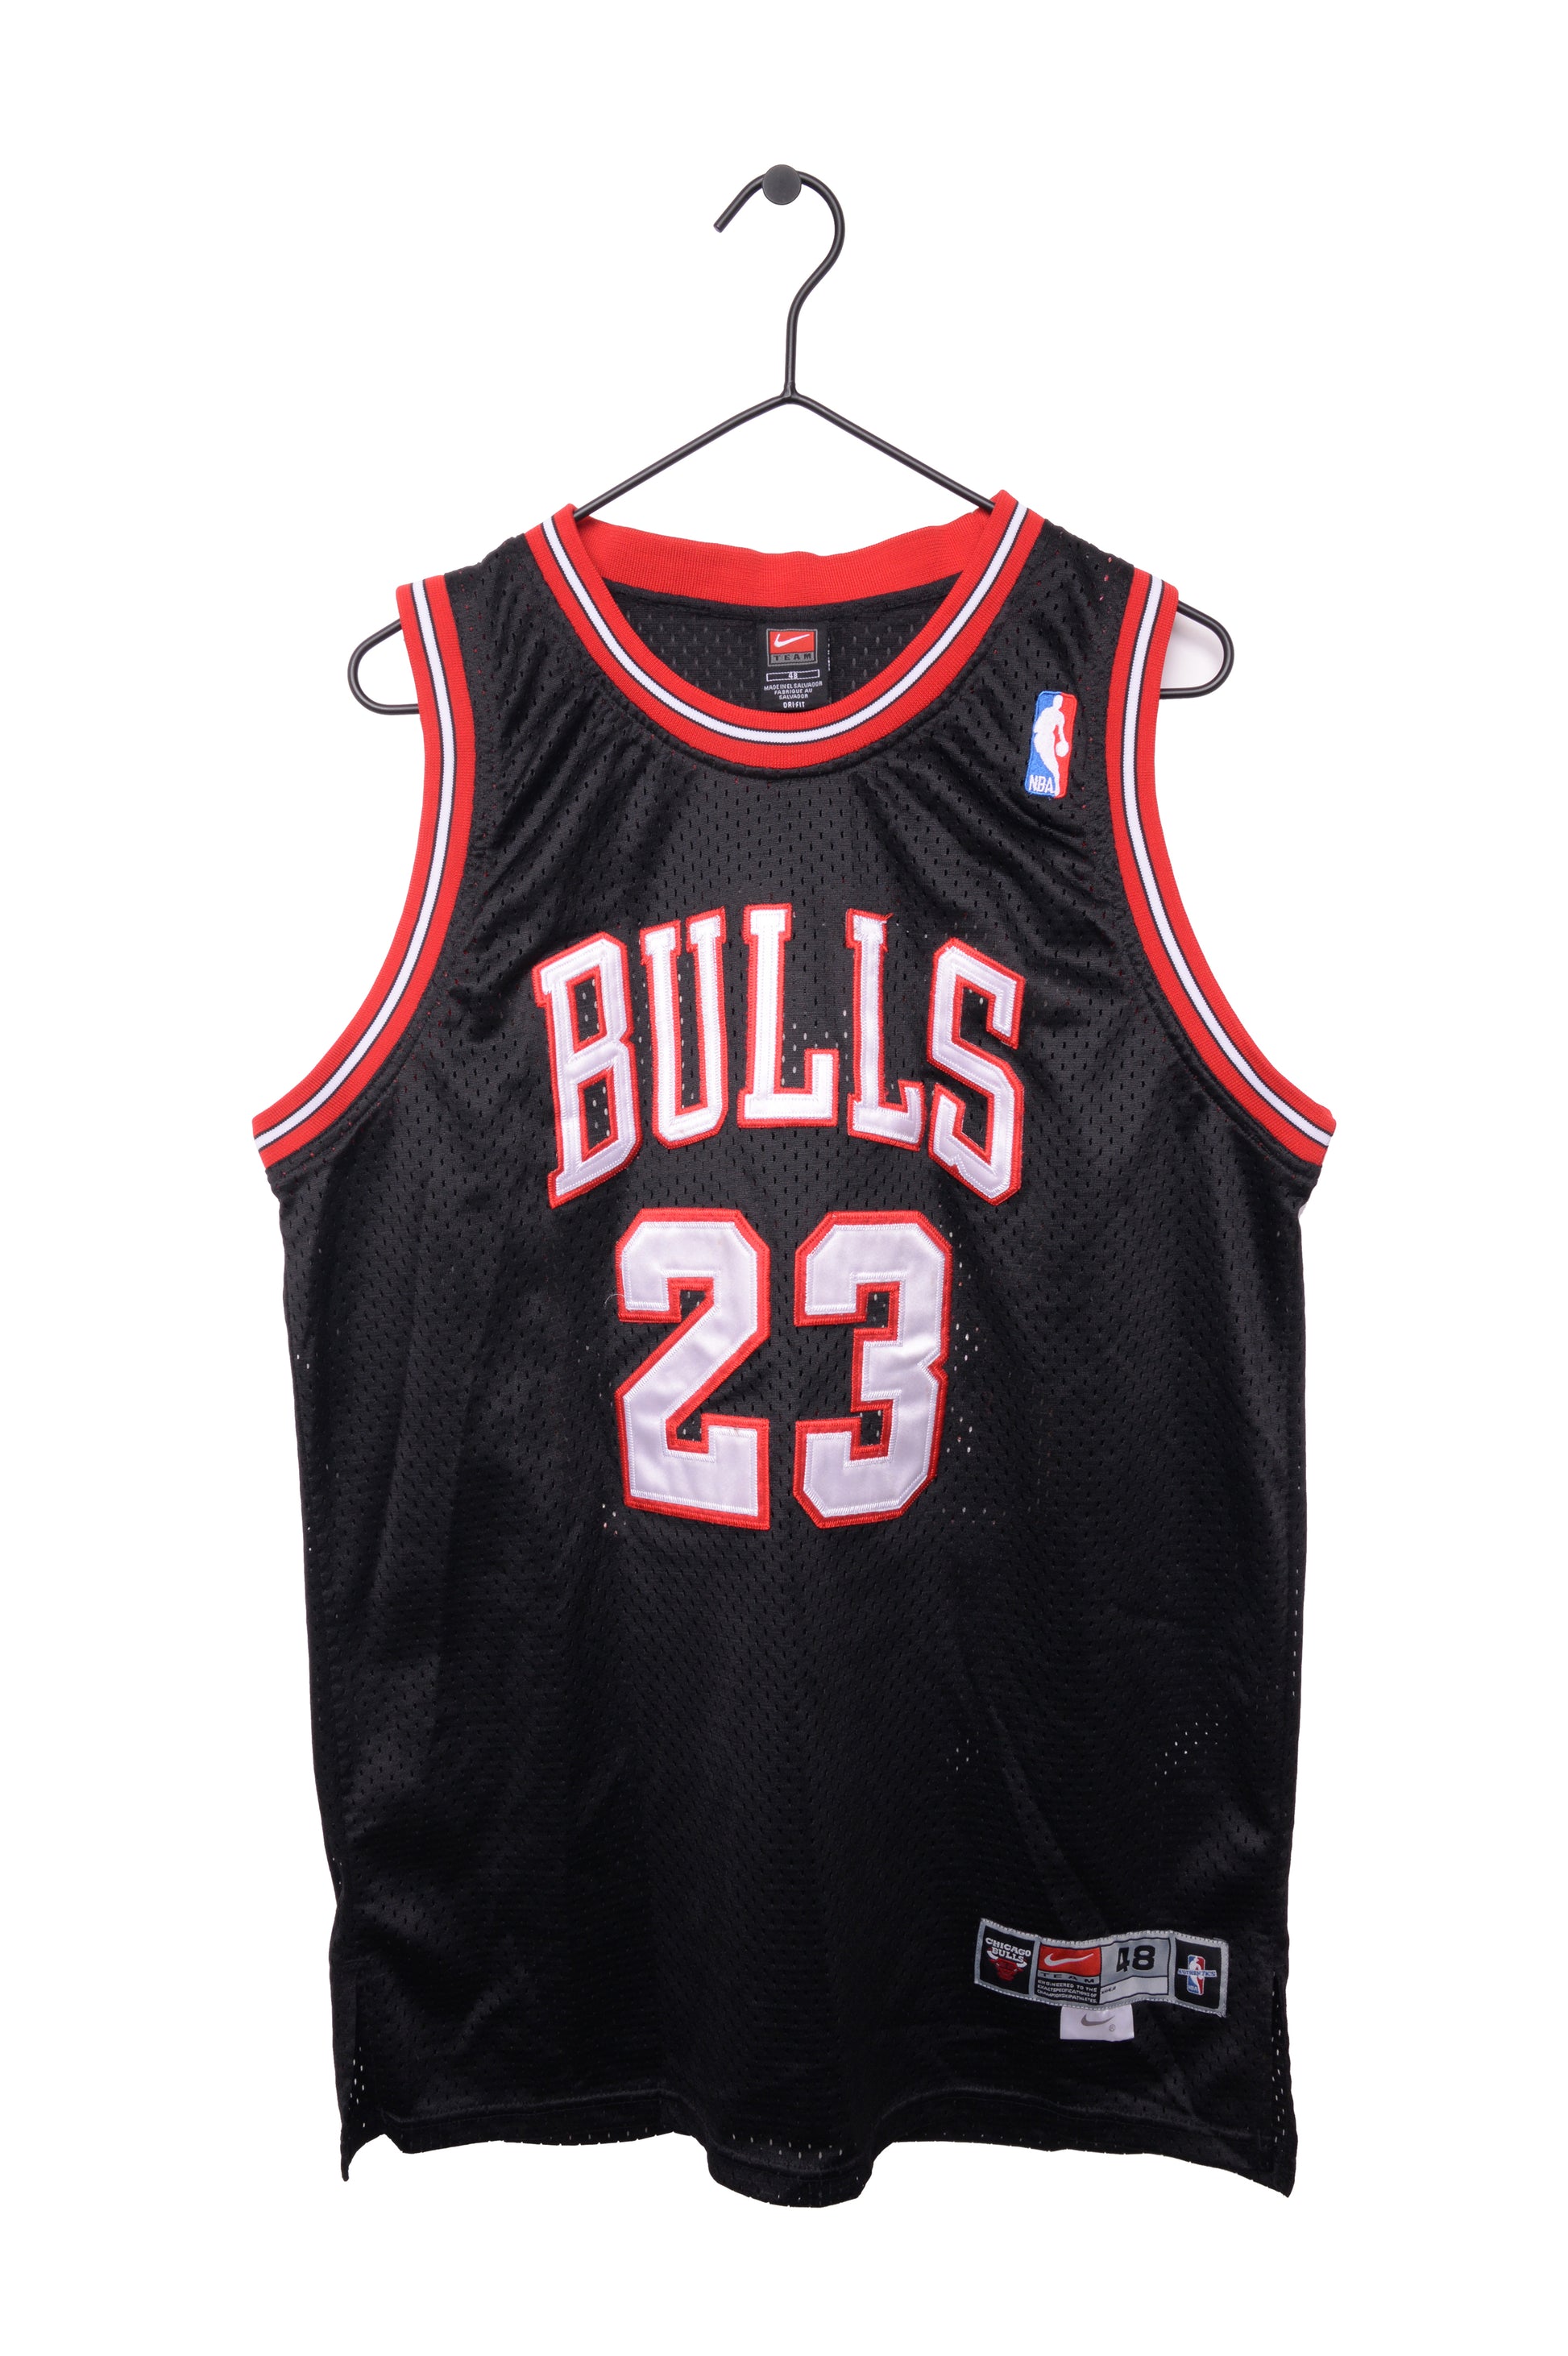 Vintage NBA Michael Jordan Chicago Bulls Tee